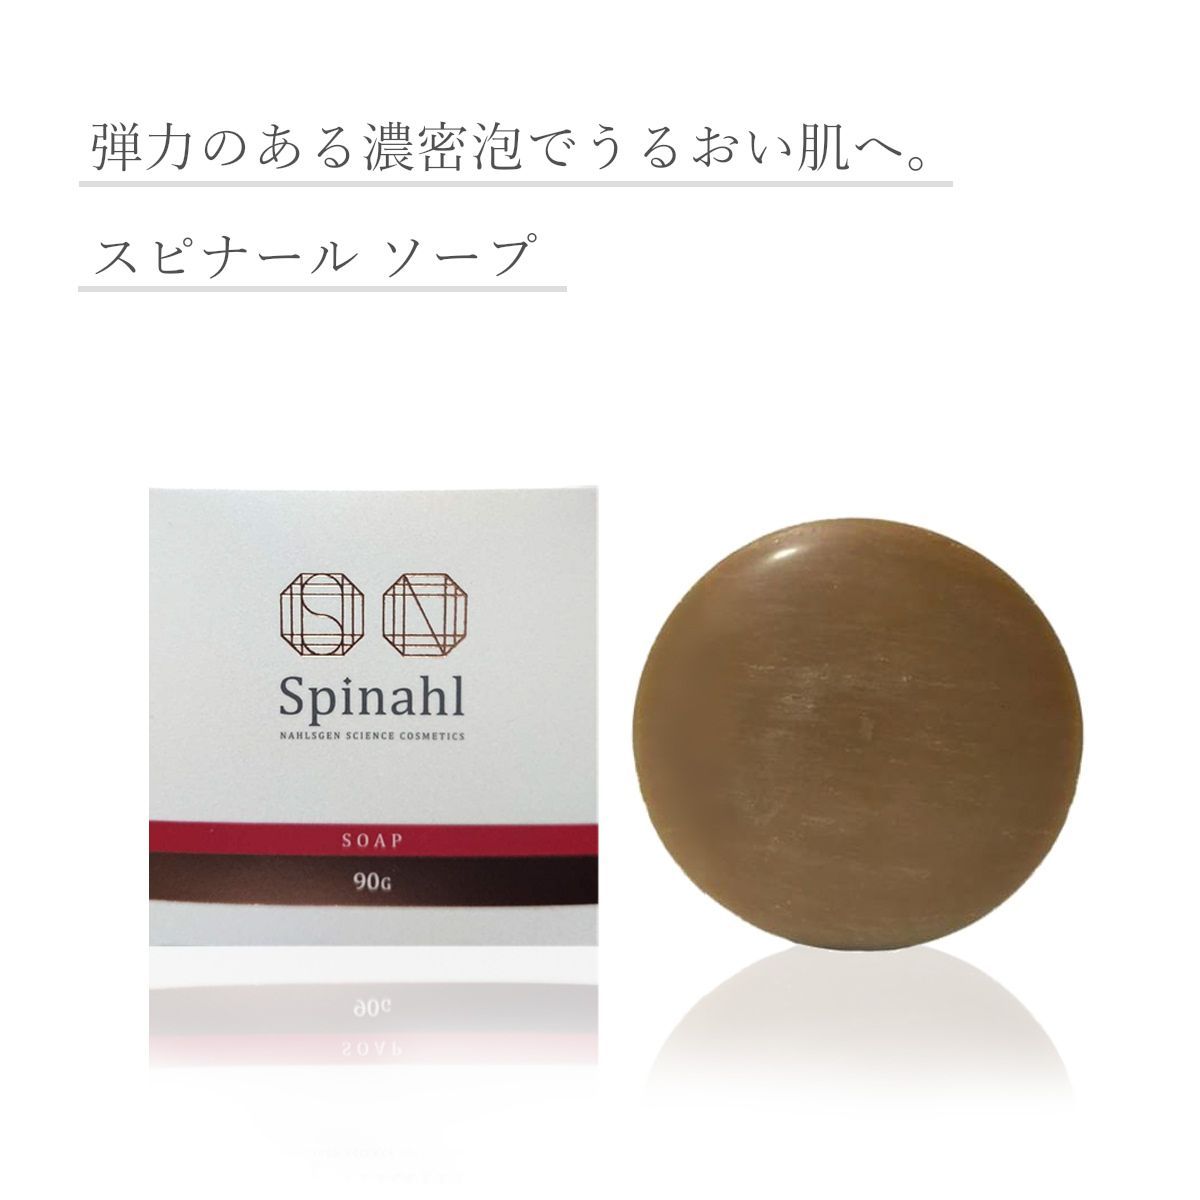 Spinahl スピナール 美容石鹸90g 日焼け対策 シミ 美白 化粧品 人気